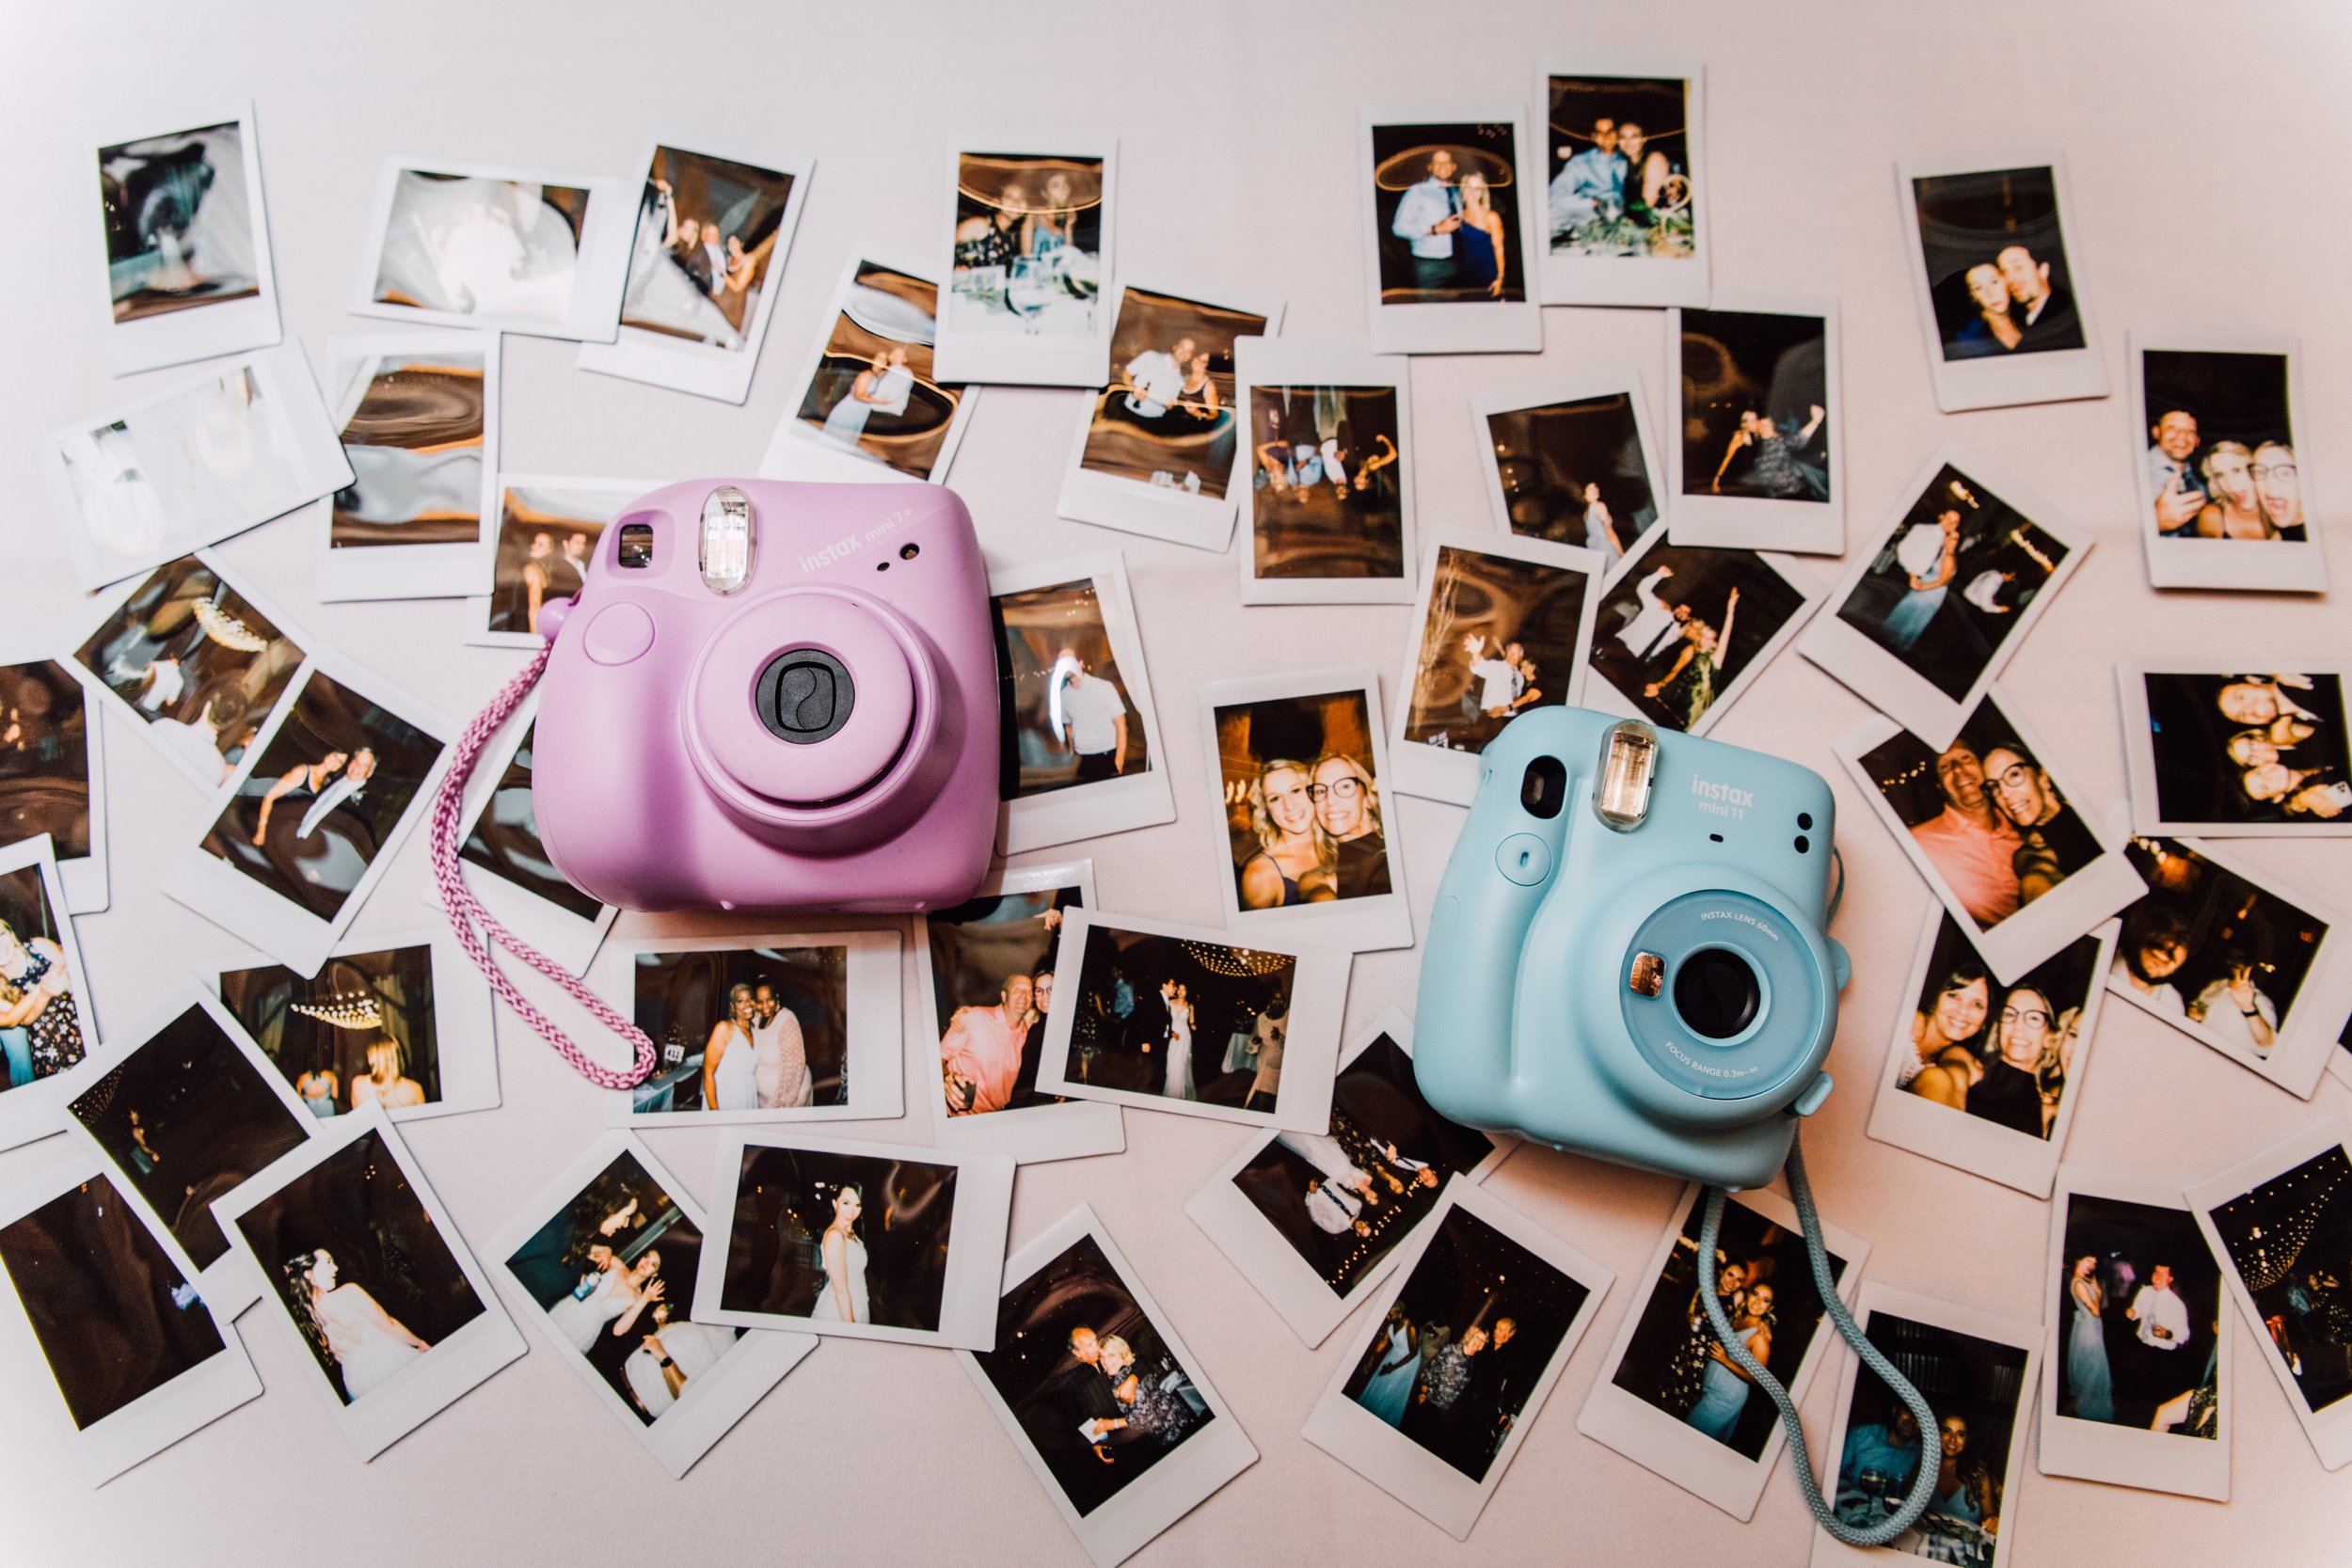  Polaroid cameras lay on top of a pile of photos at a wedding reception 